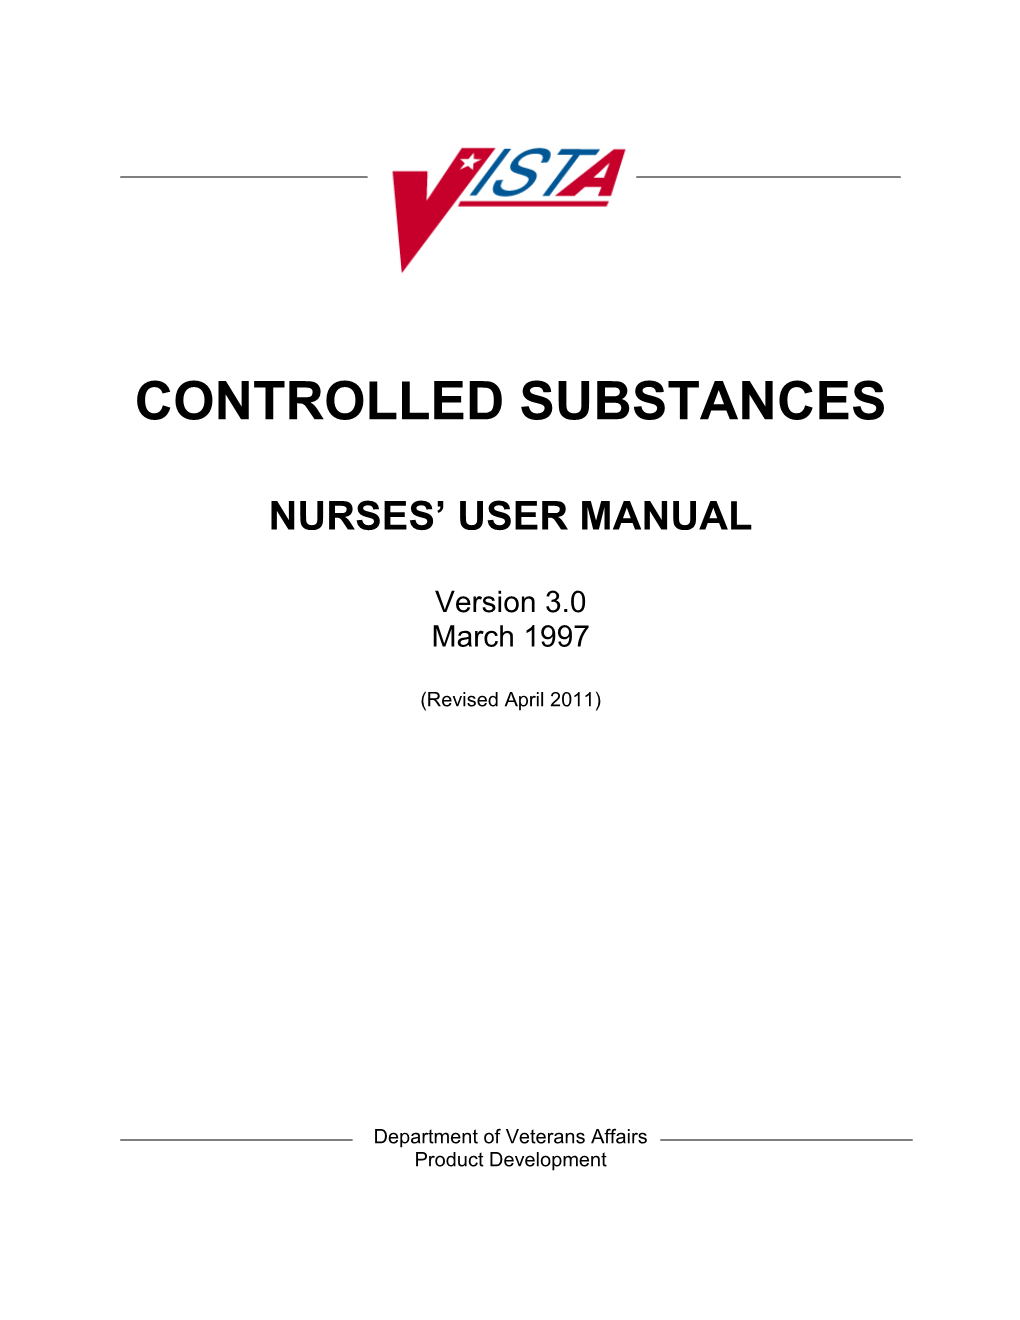 Department of Veterans Affairs, Controlled Substances Nurses' User Manual